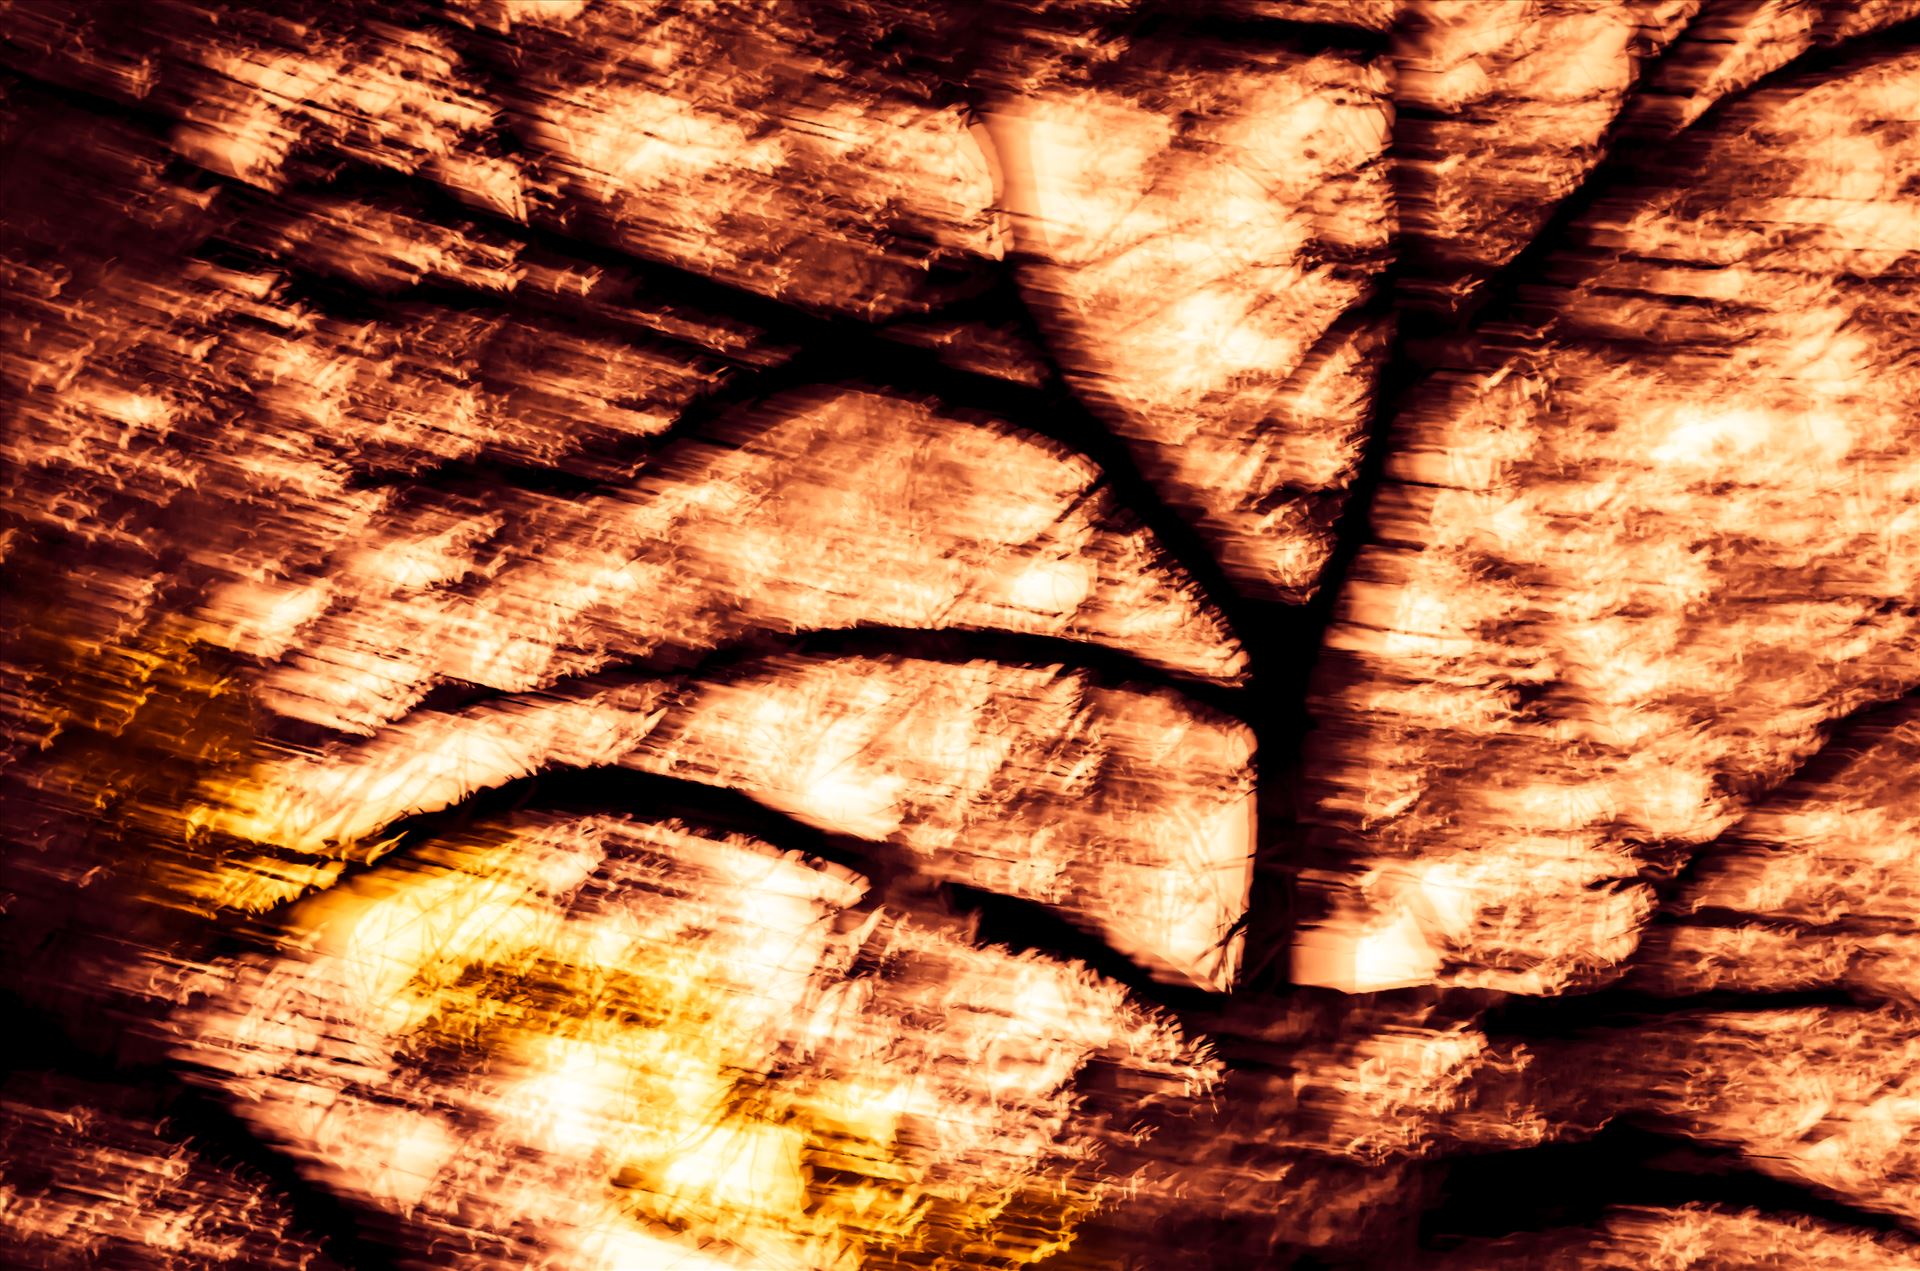 Blur-Start-0044-PS-Print.jpg  by Two Fingers Media